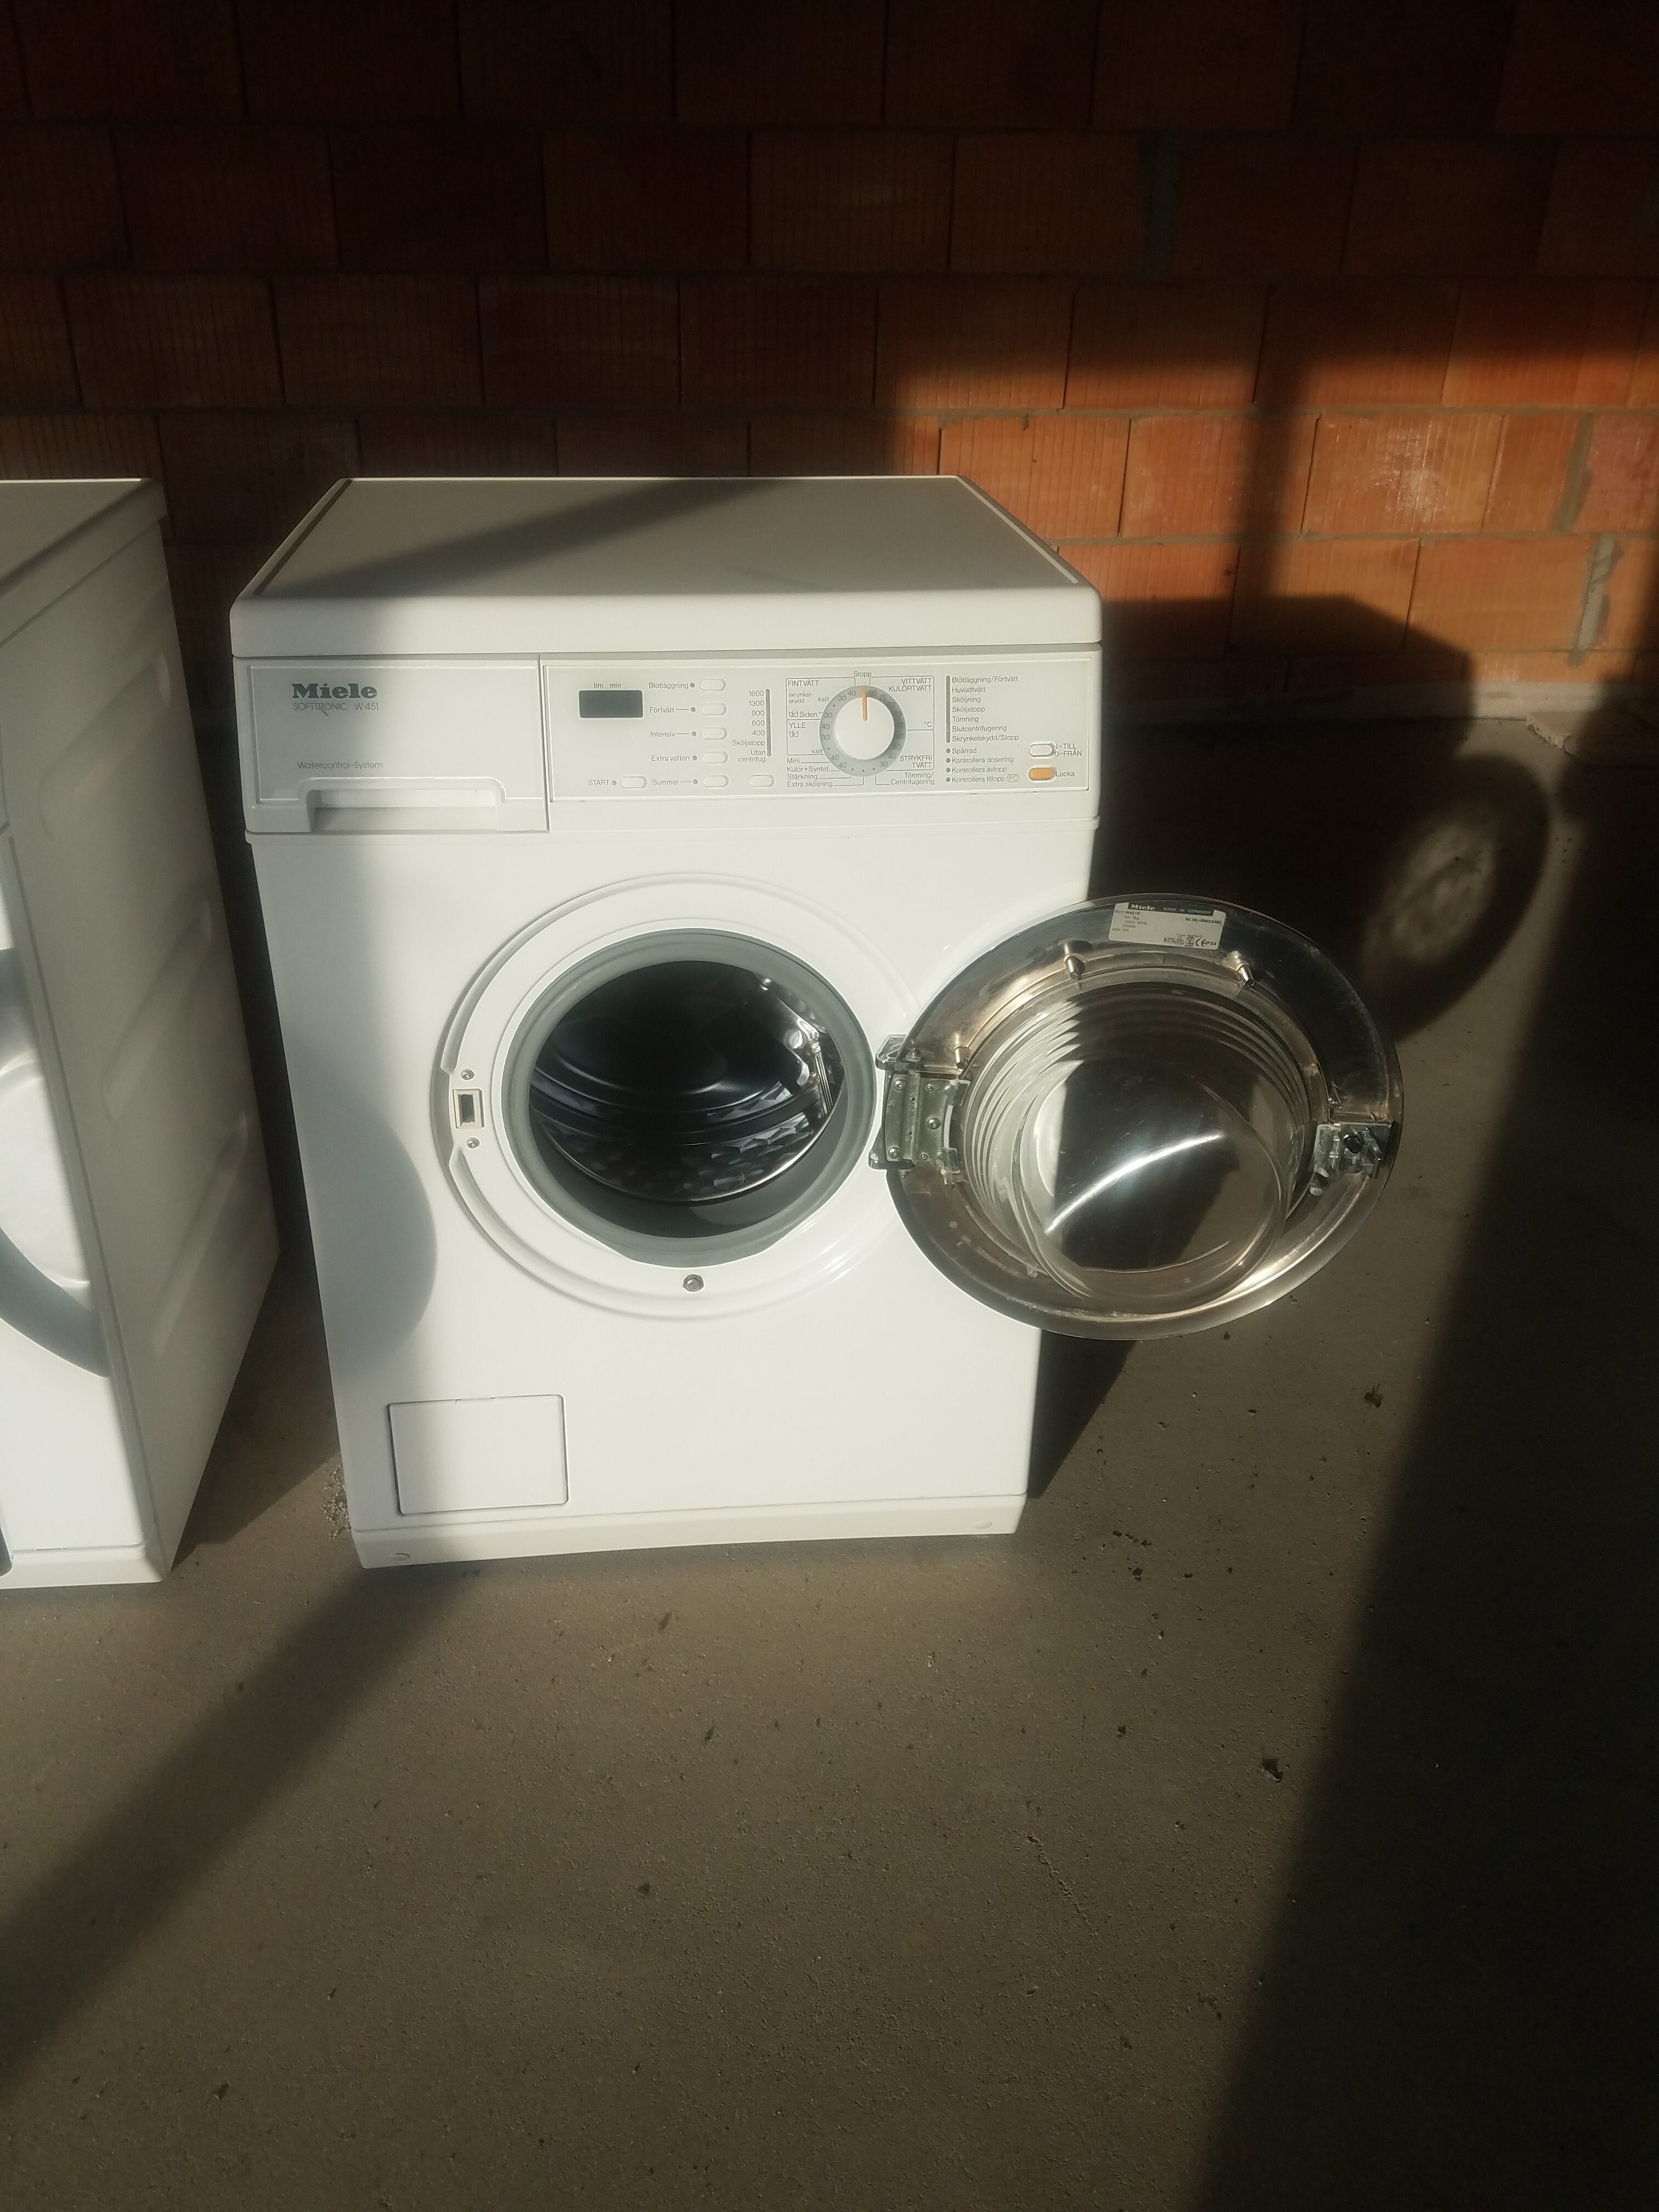 Miele W451S washing machine Washing machines, dishwashers and dryers